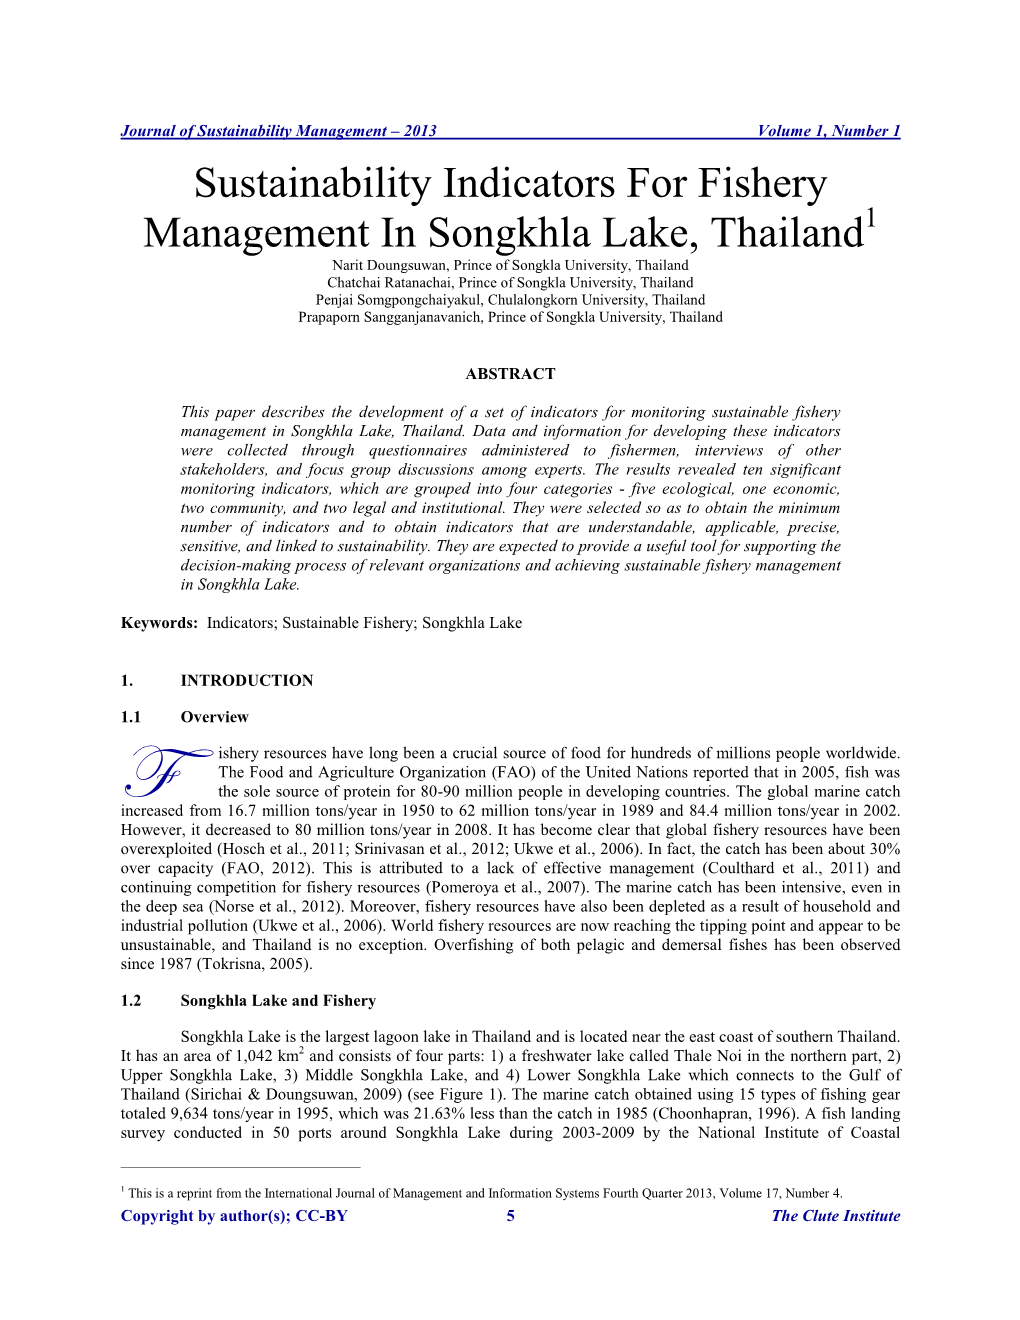 Sustainability Indicators for Fishery Management in Songkhla Lake